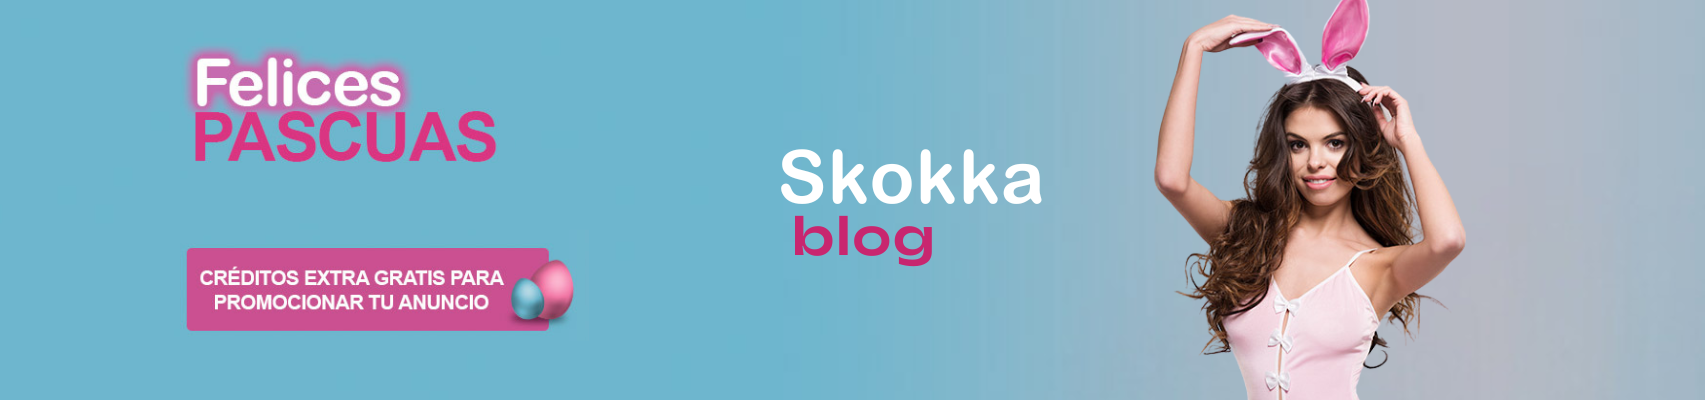 Blog oficial de Skokka